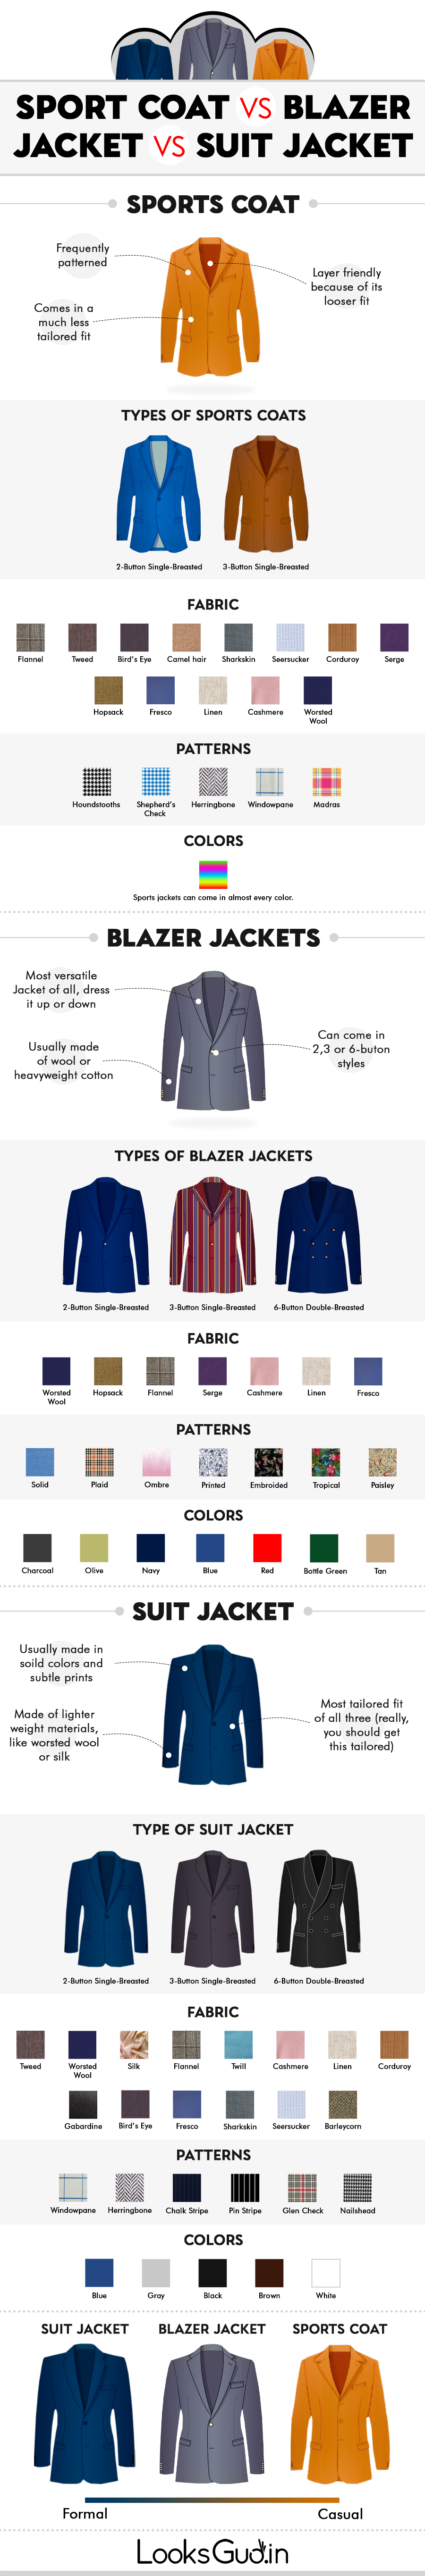 blazer vs suit jacket vs sports coat